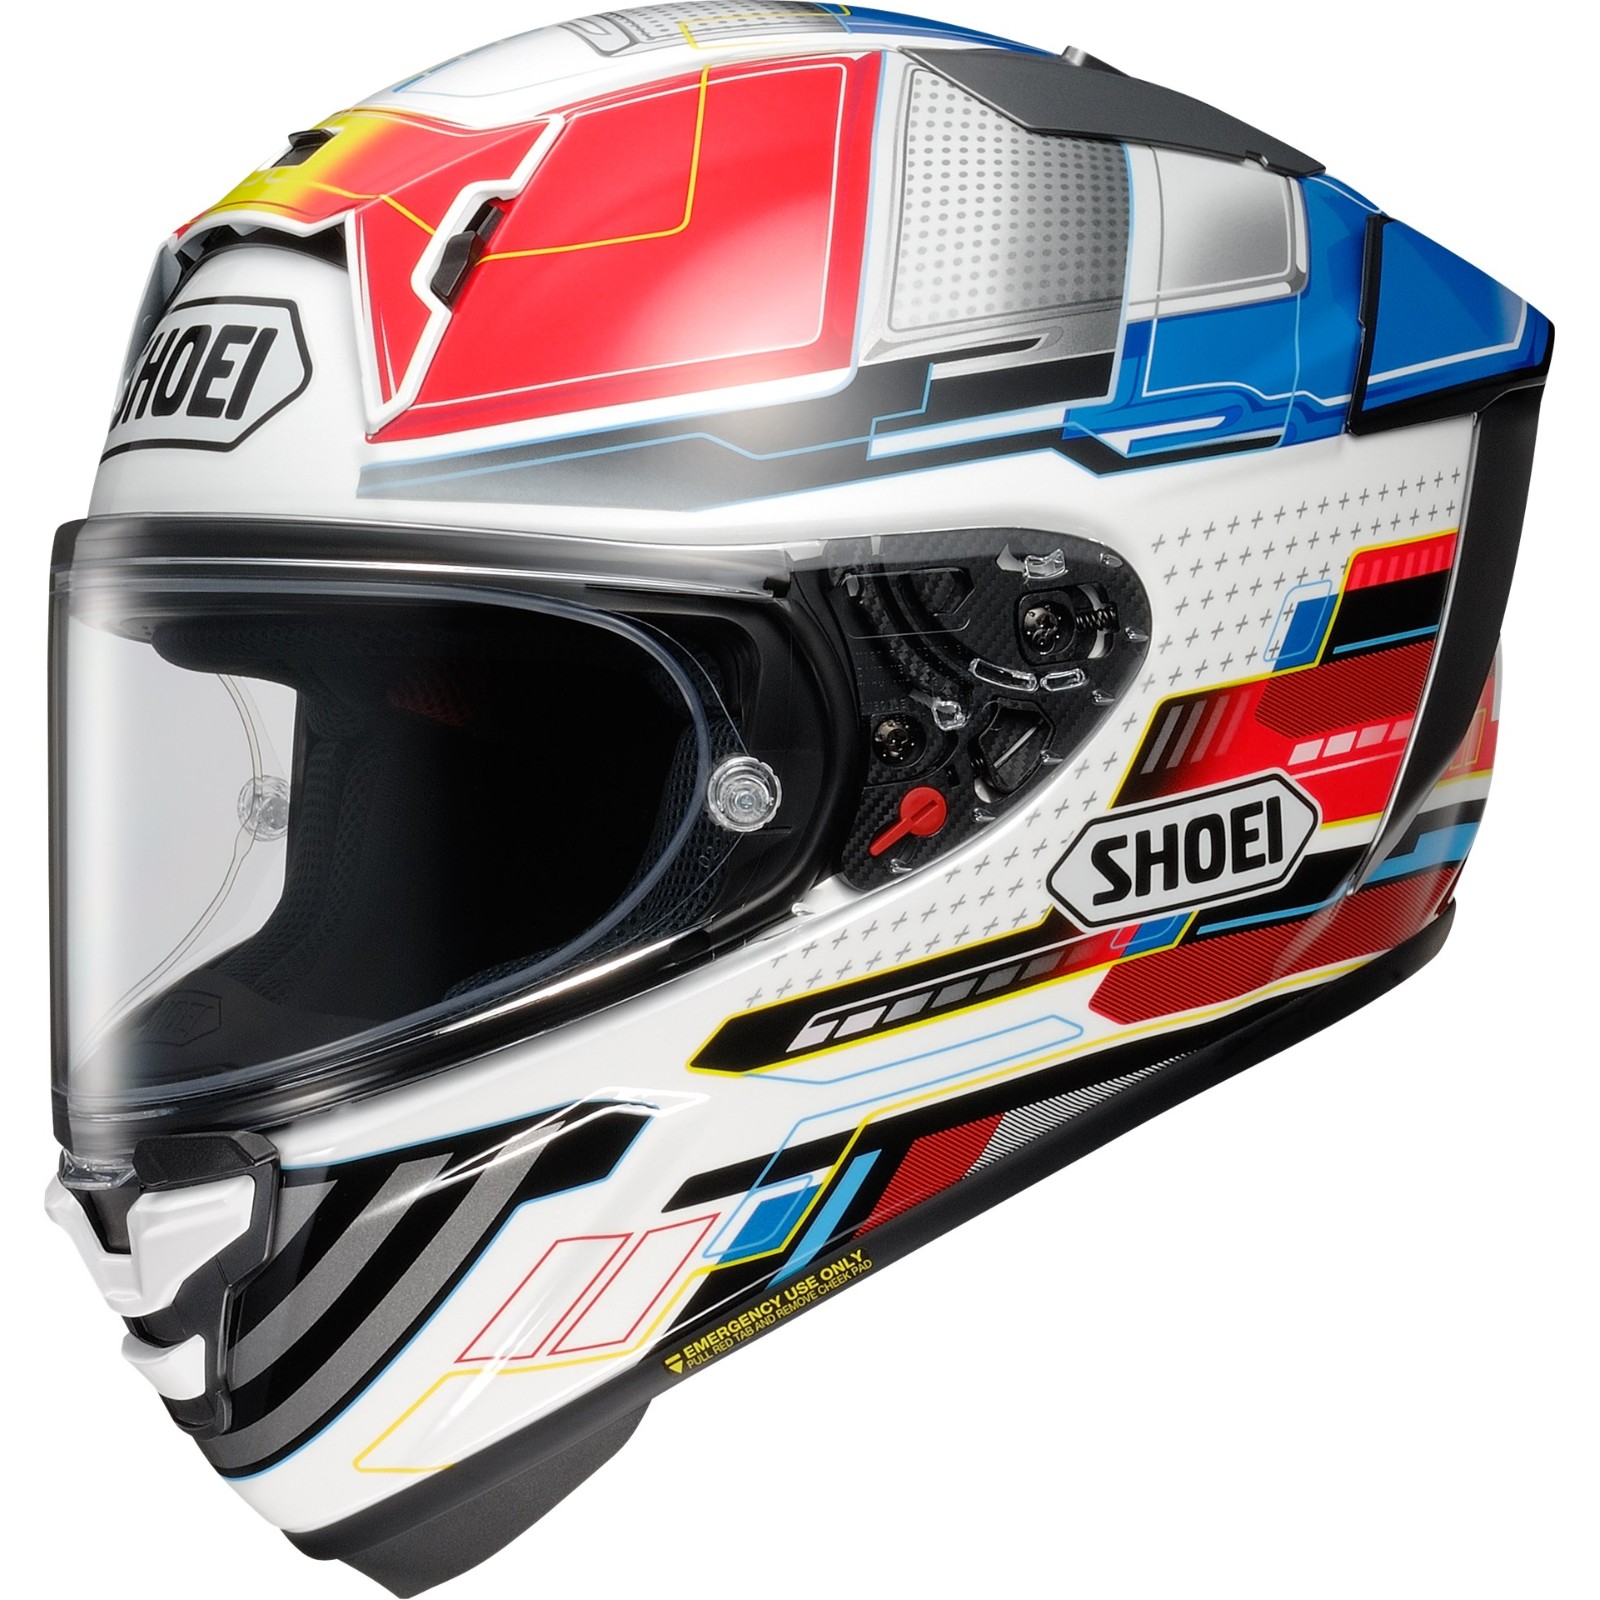 Motorradhelm Shoei X-SPR Pro Proxy Racing Helm